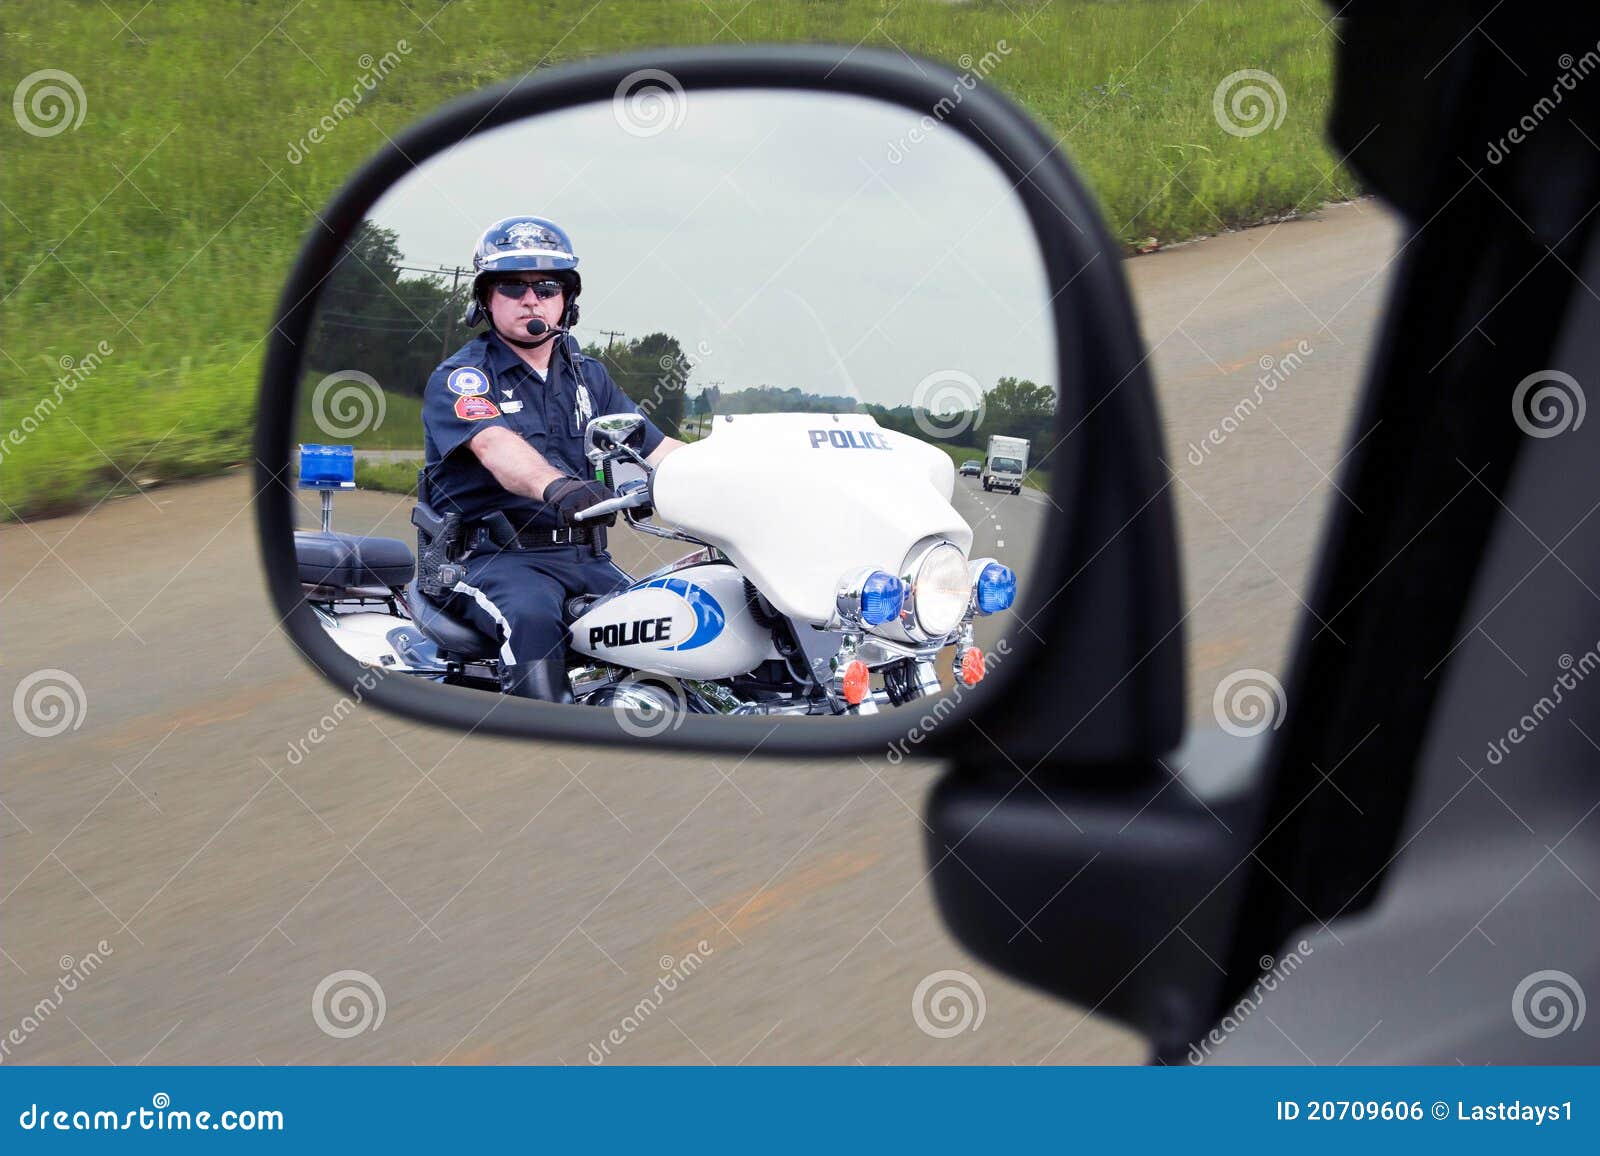 police-motorcycle-cop-mirror-20709606.jp